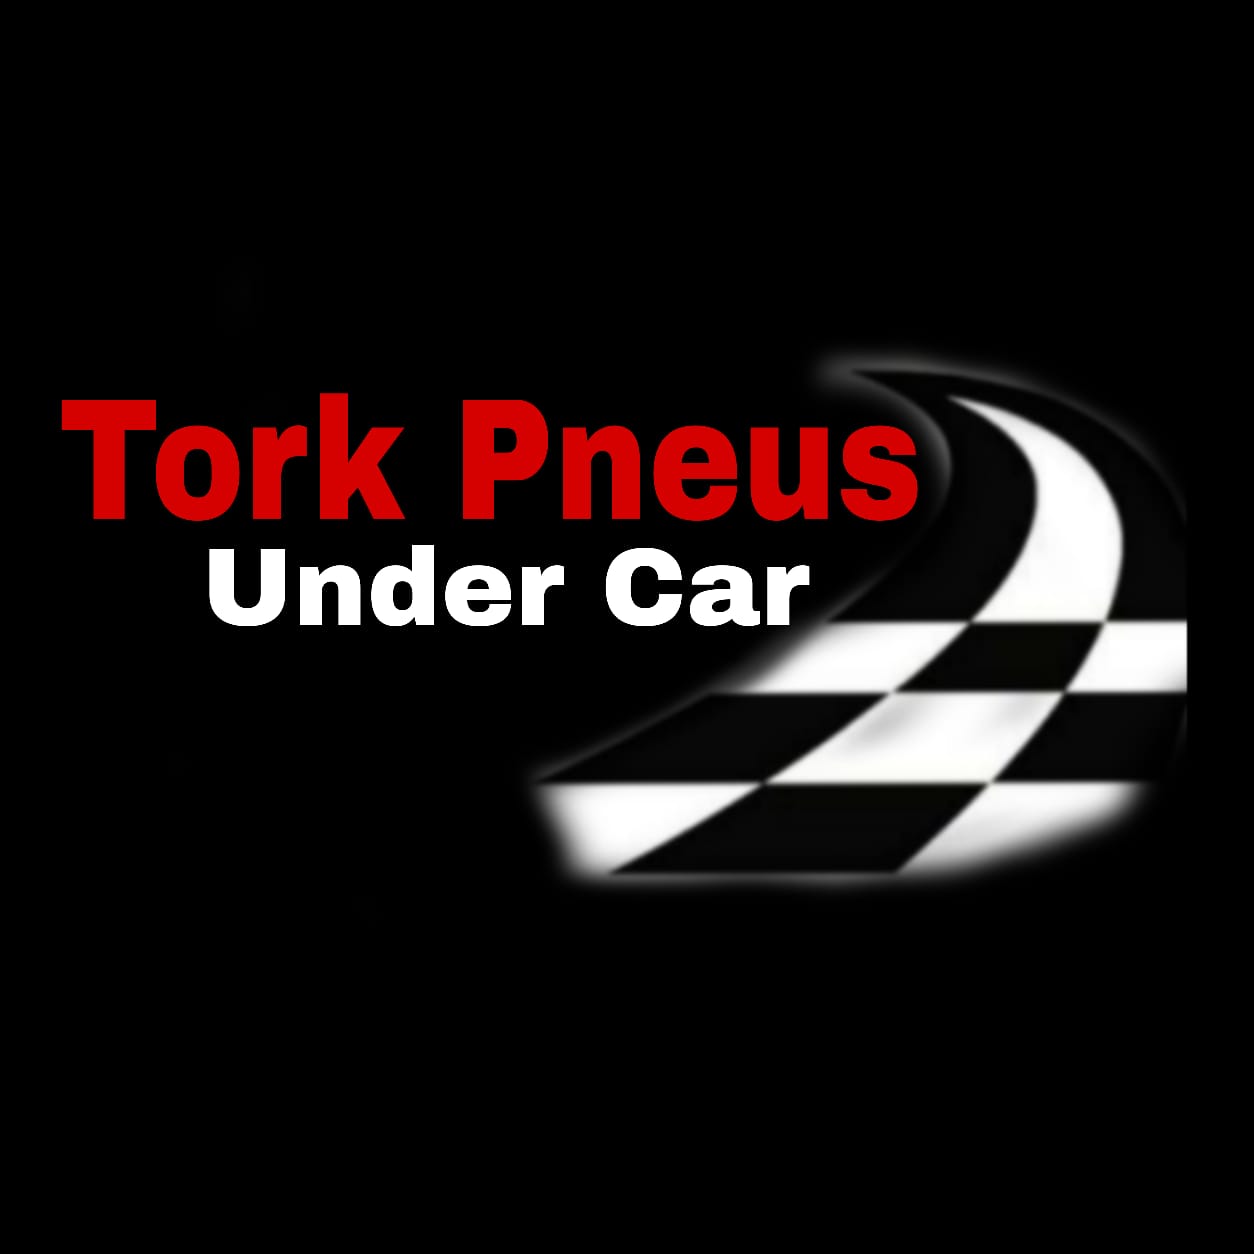 TORK PNEUS UNDER CAR